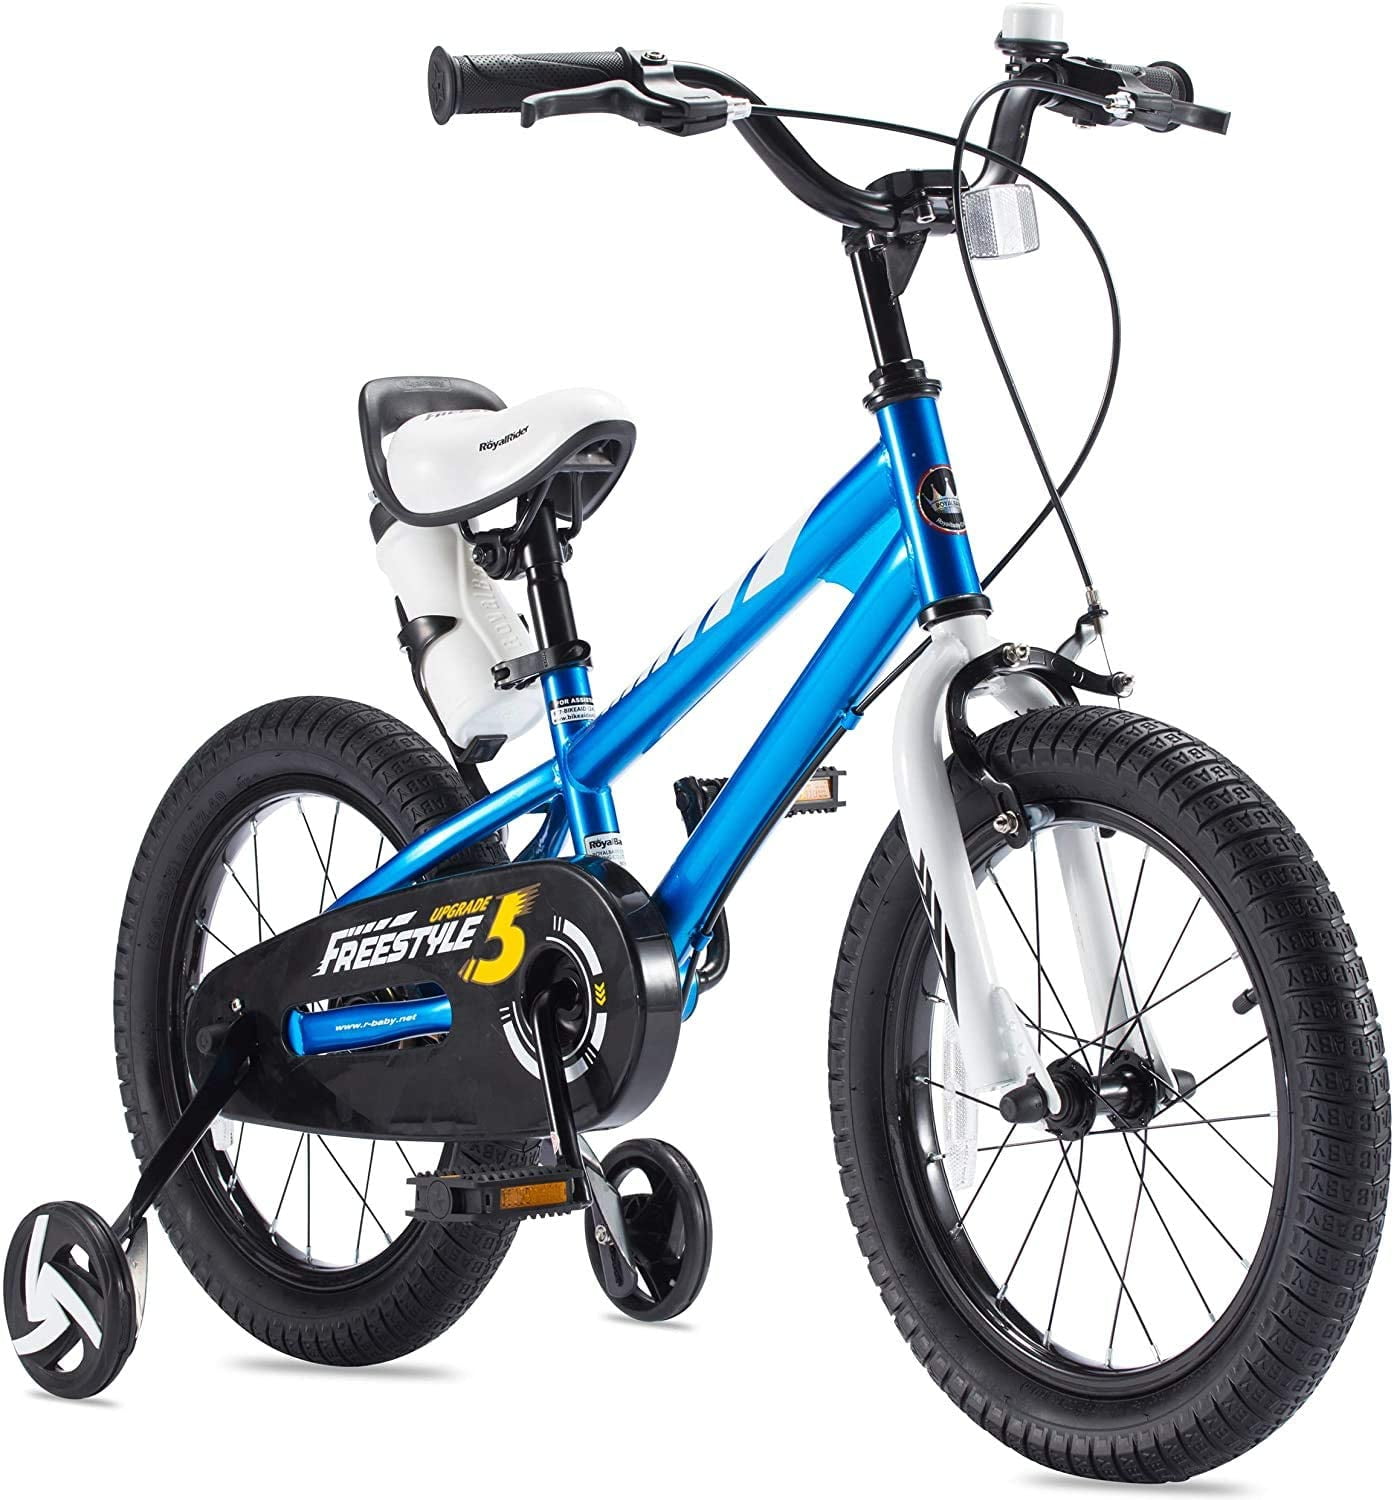 RoyalBaby Boys Girls Kids Bike BMX Freestyle 2 Hand Brakes Bicycles with Training Wheels Child Bicycle